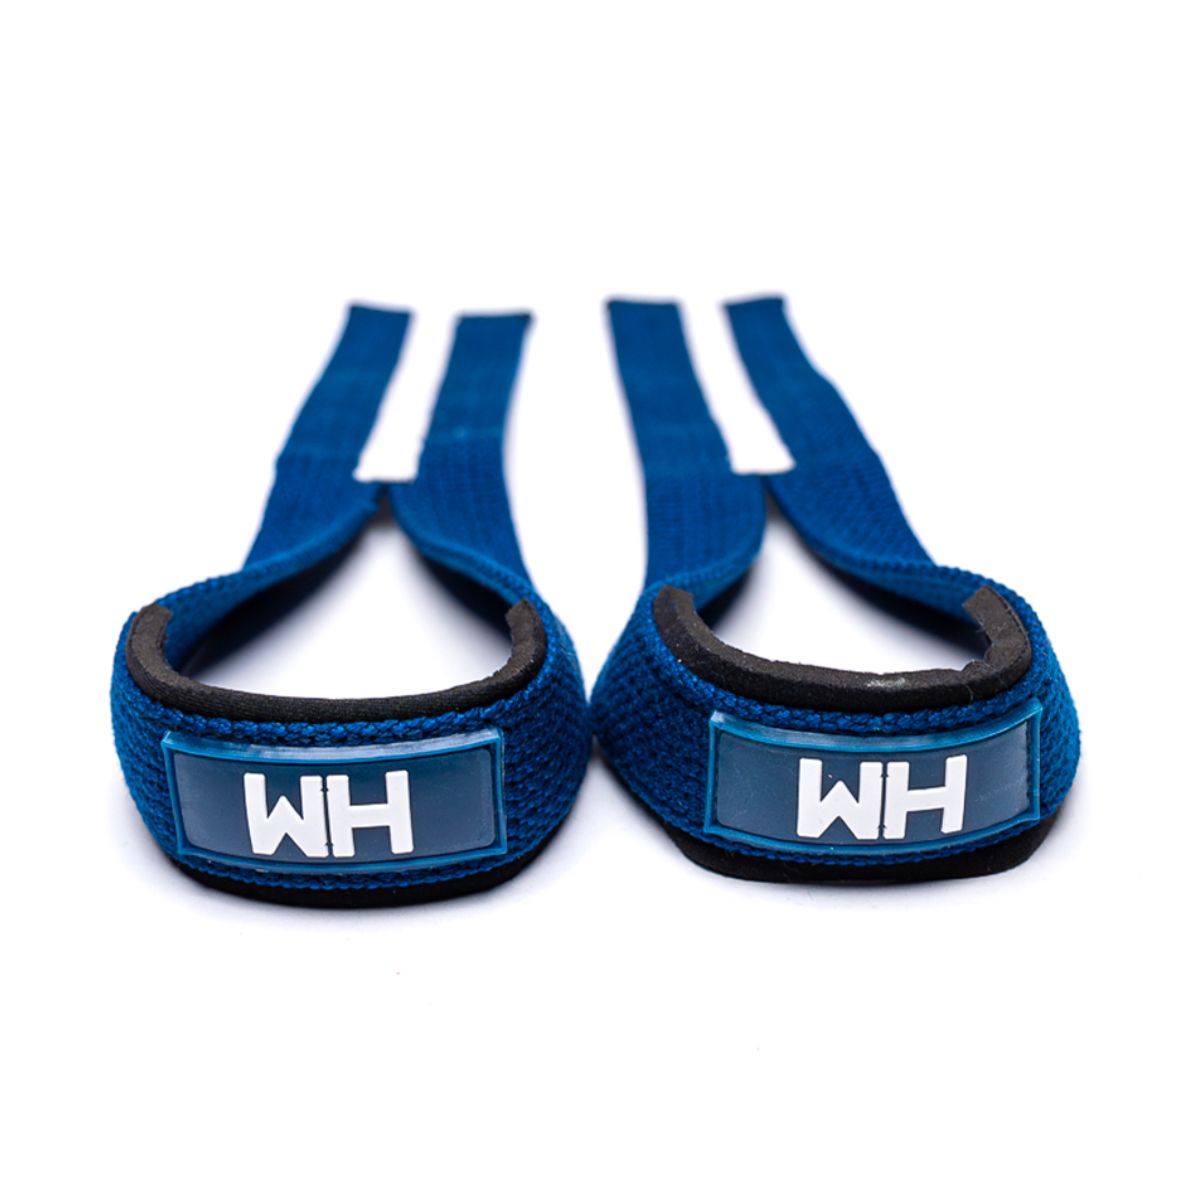 3.5mm Weightlifting Wrist Wraps – W